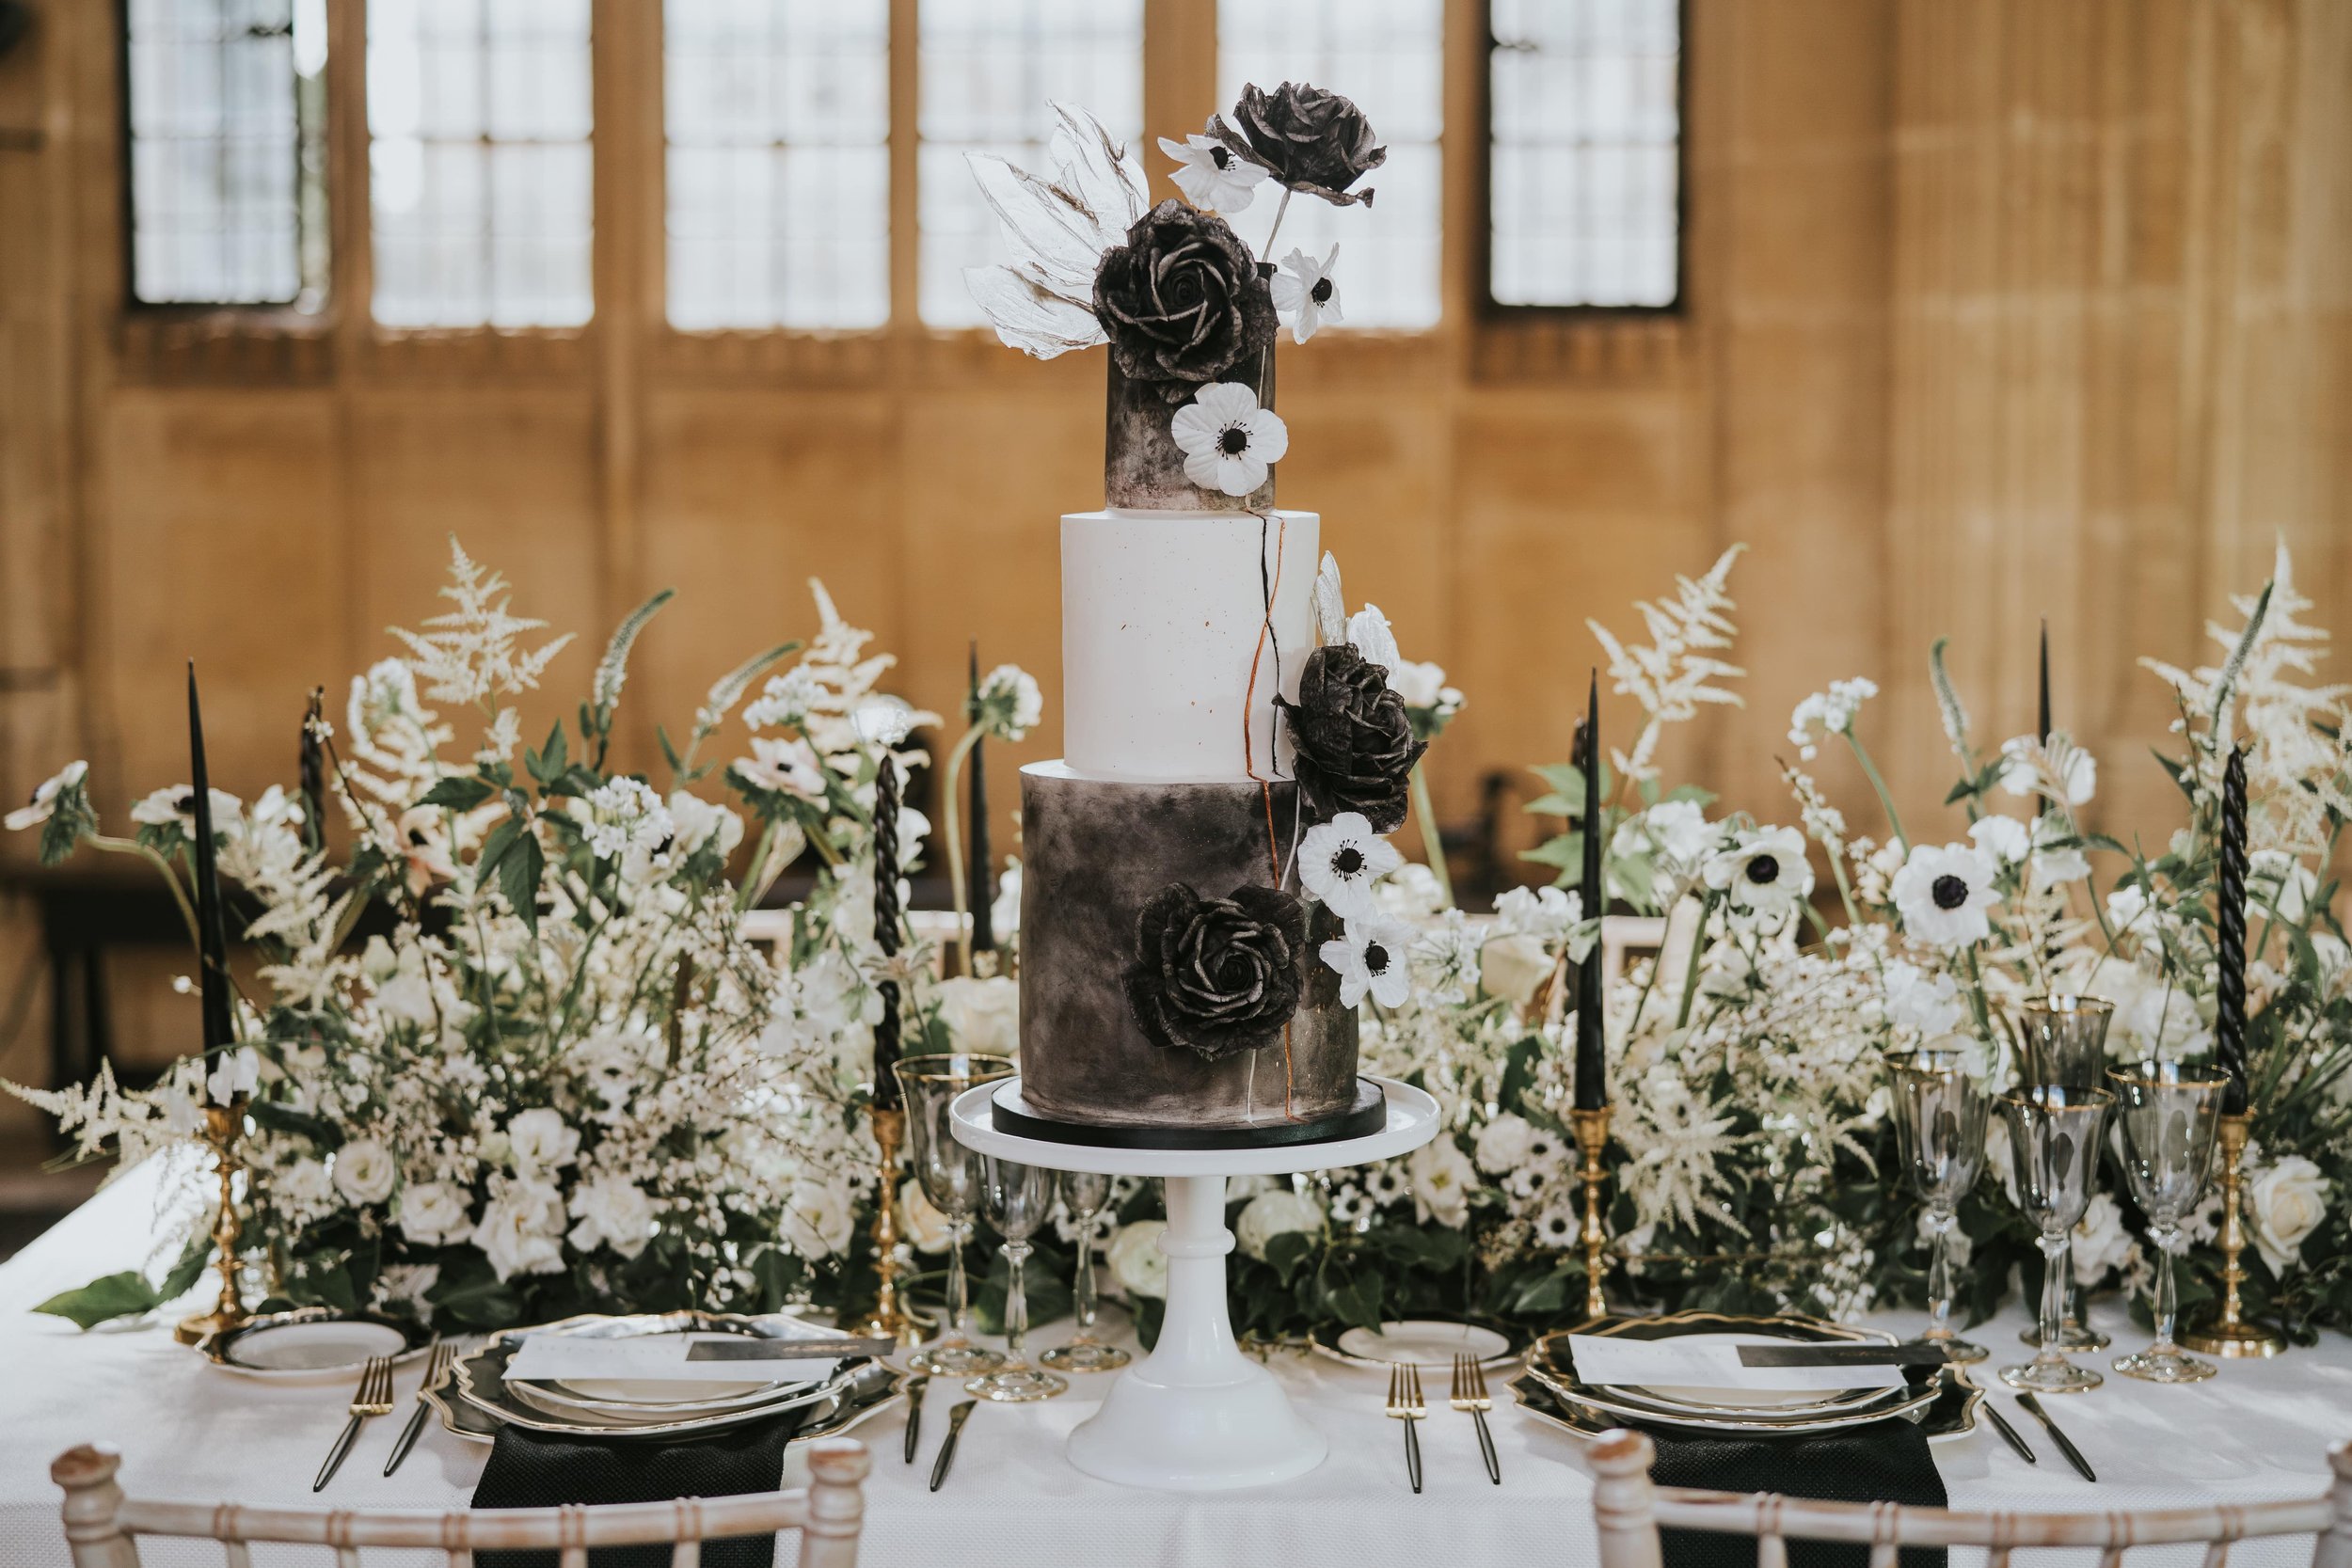 Modern hand-painted black and white wedding cake